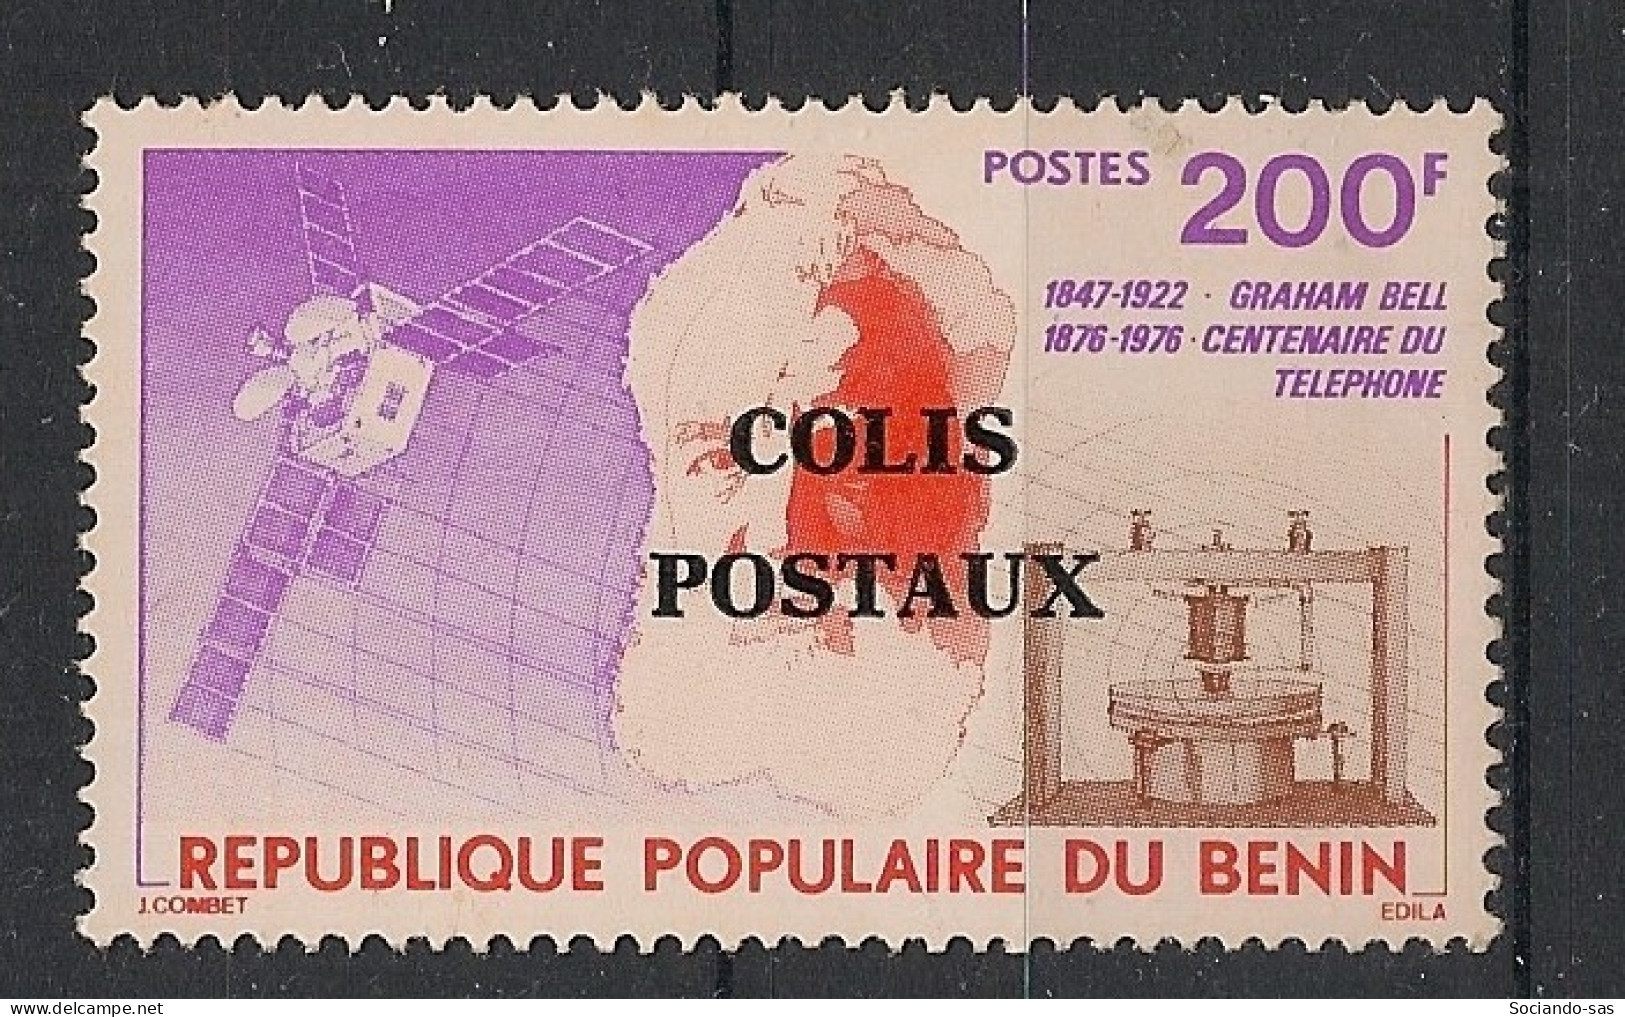 BENIN - 1998 - Colis Postaux N°Mi. 38 - Graham Bell - Neuf Luxe ** / MNH / Postfrisch - Benin - Dahomey (1960-...)